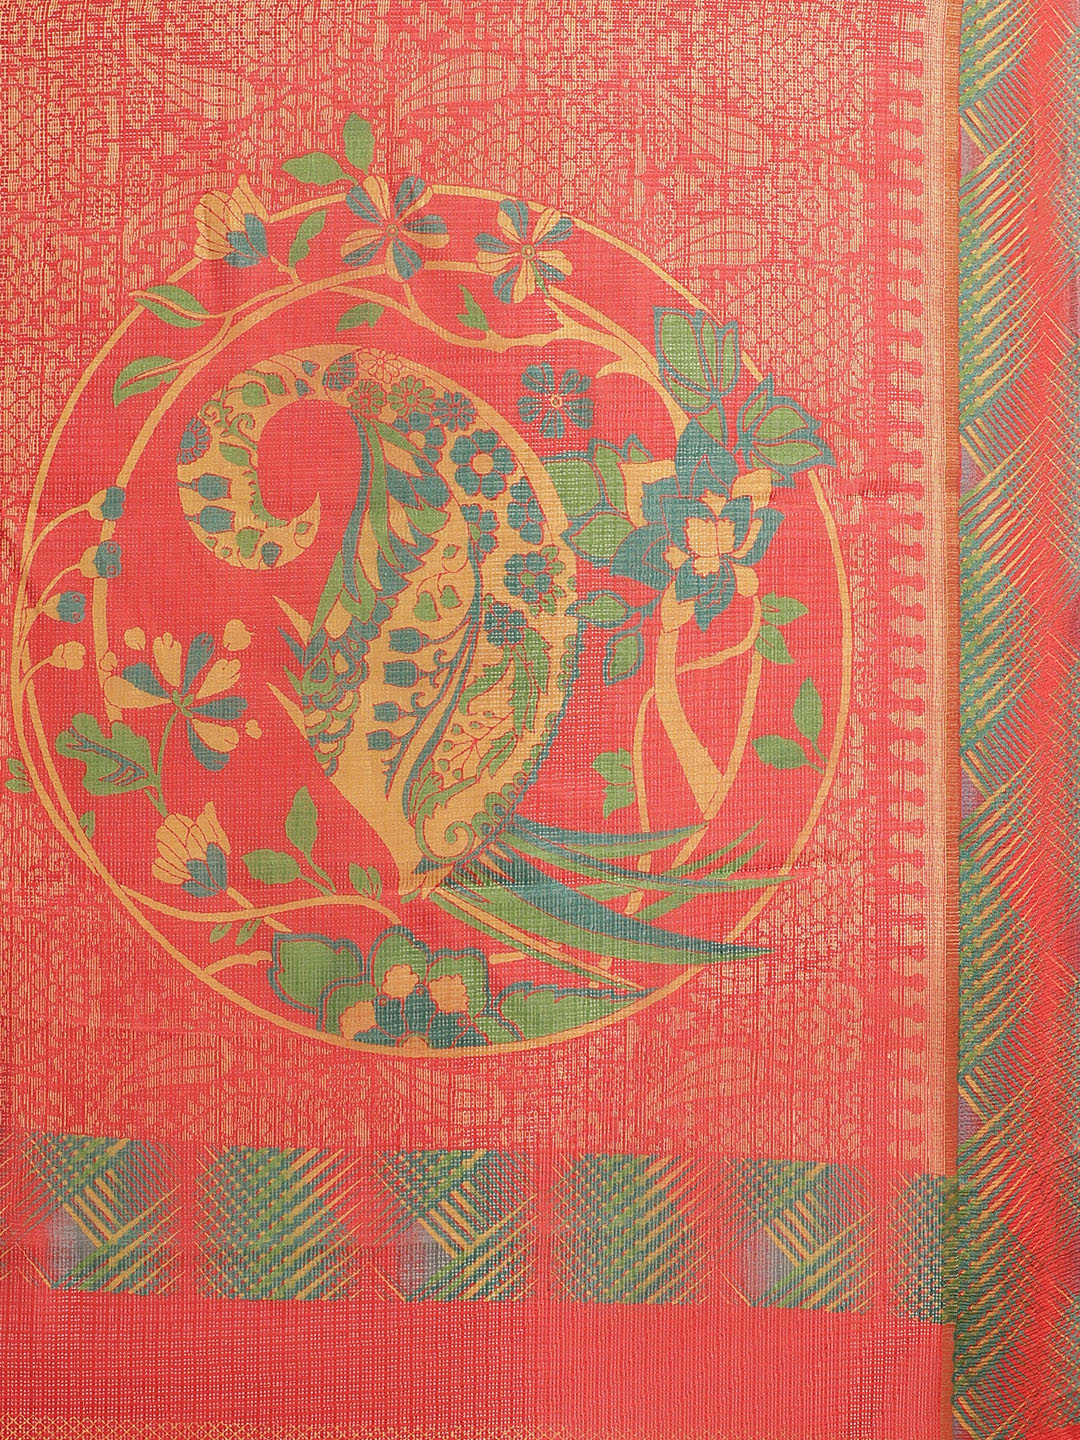 Women's Red Cotton Blend Printed Saree - Ahika